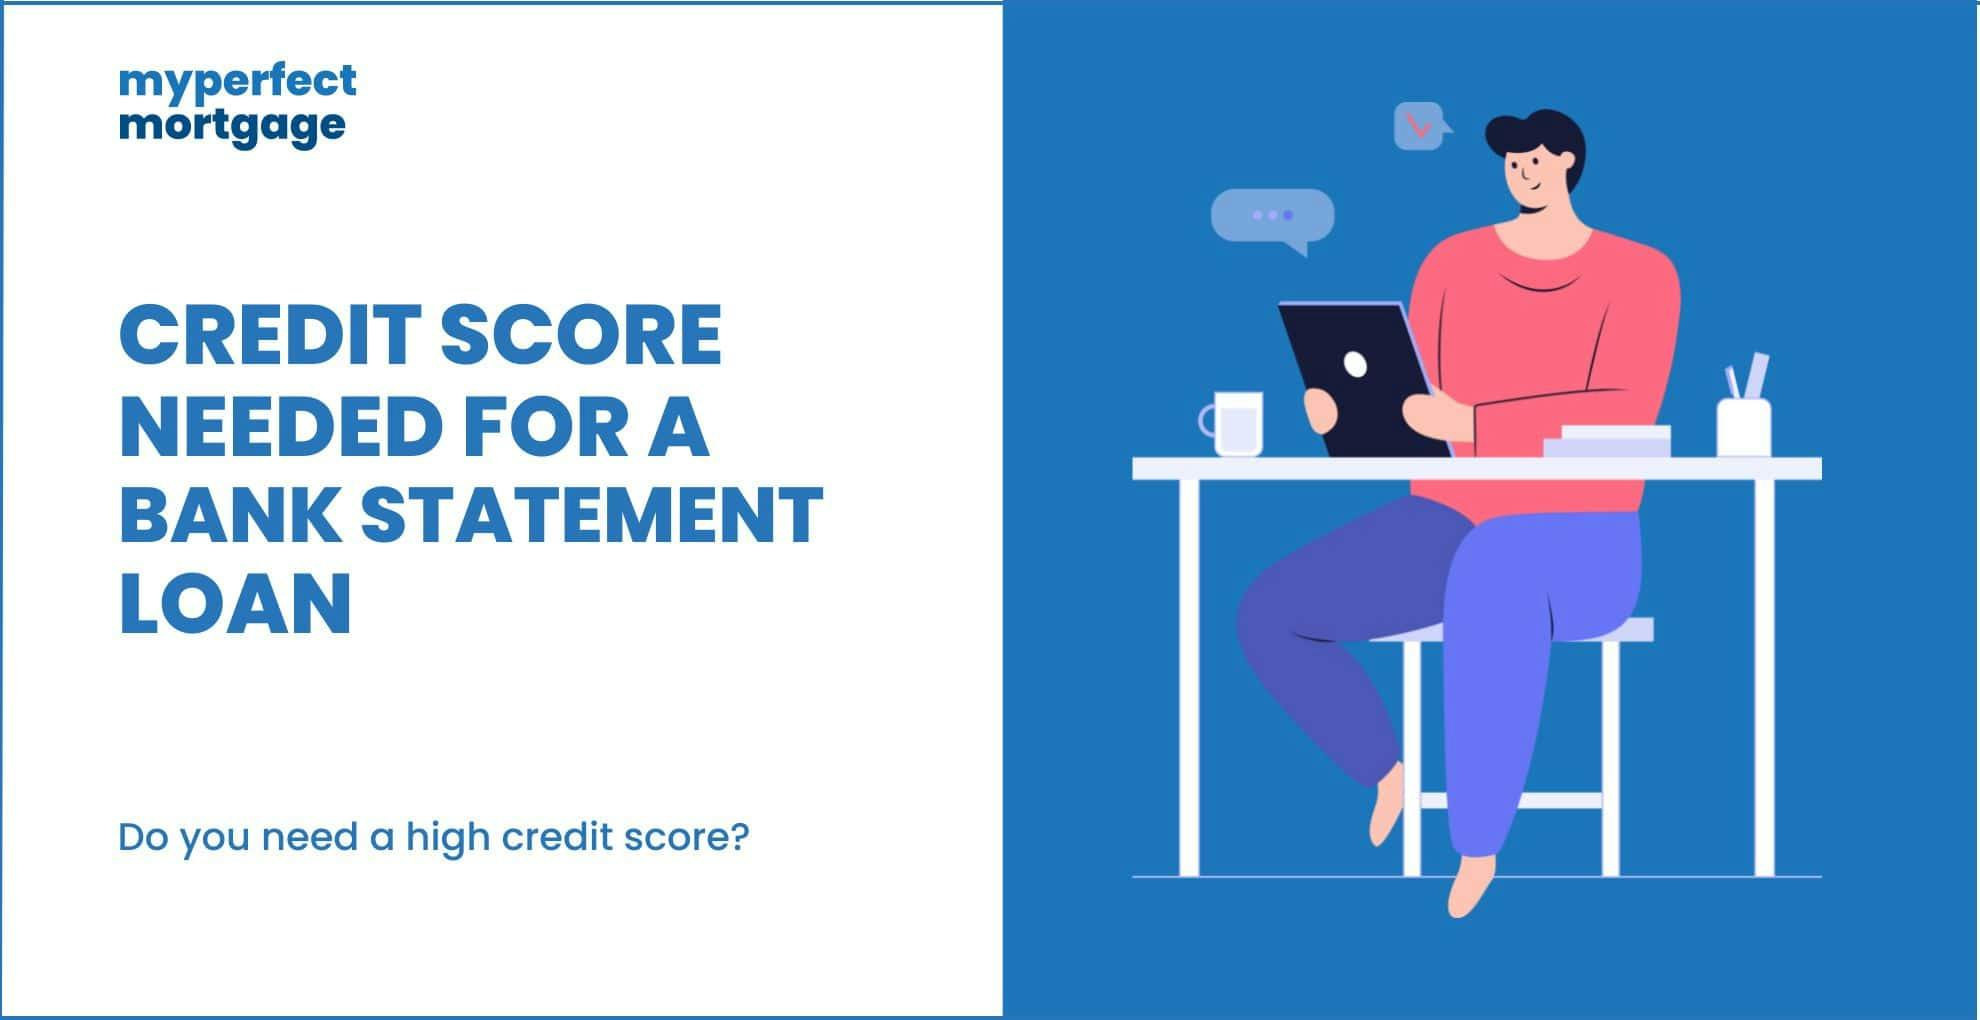 Bank statement loan credit score requirements